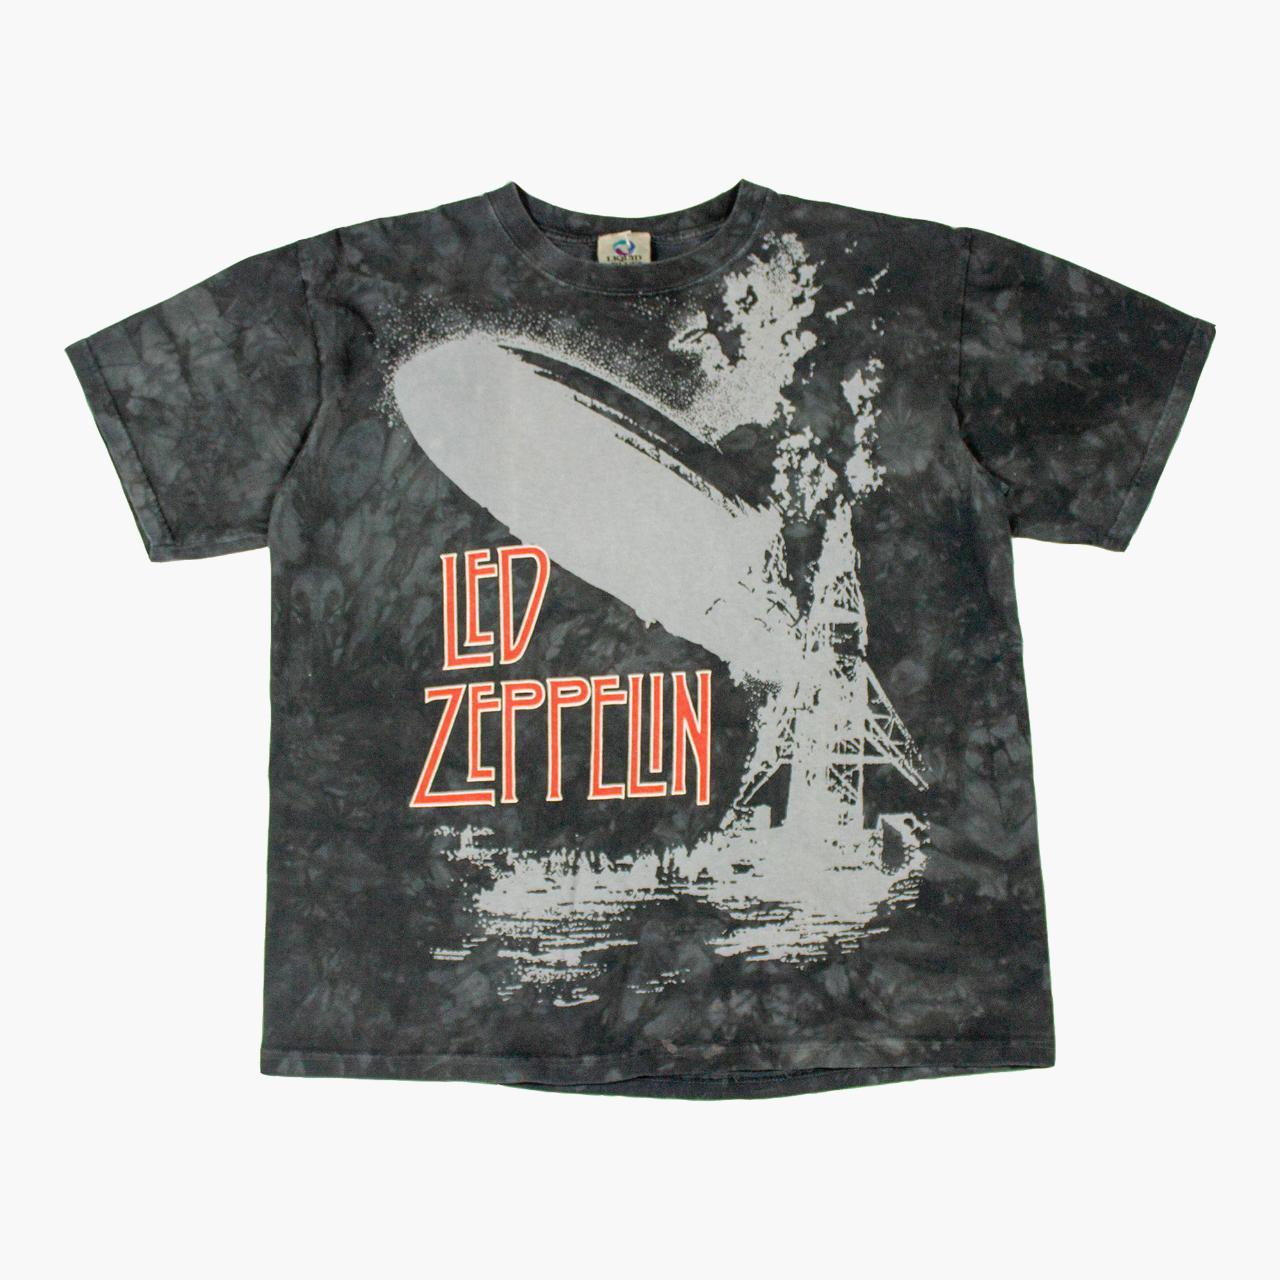 Product Image 1 - Vintage Led Zeppelin t shirt

Grey